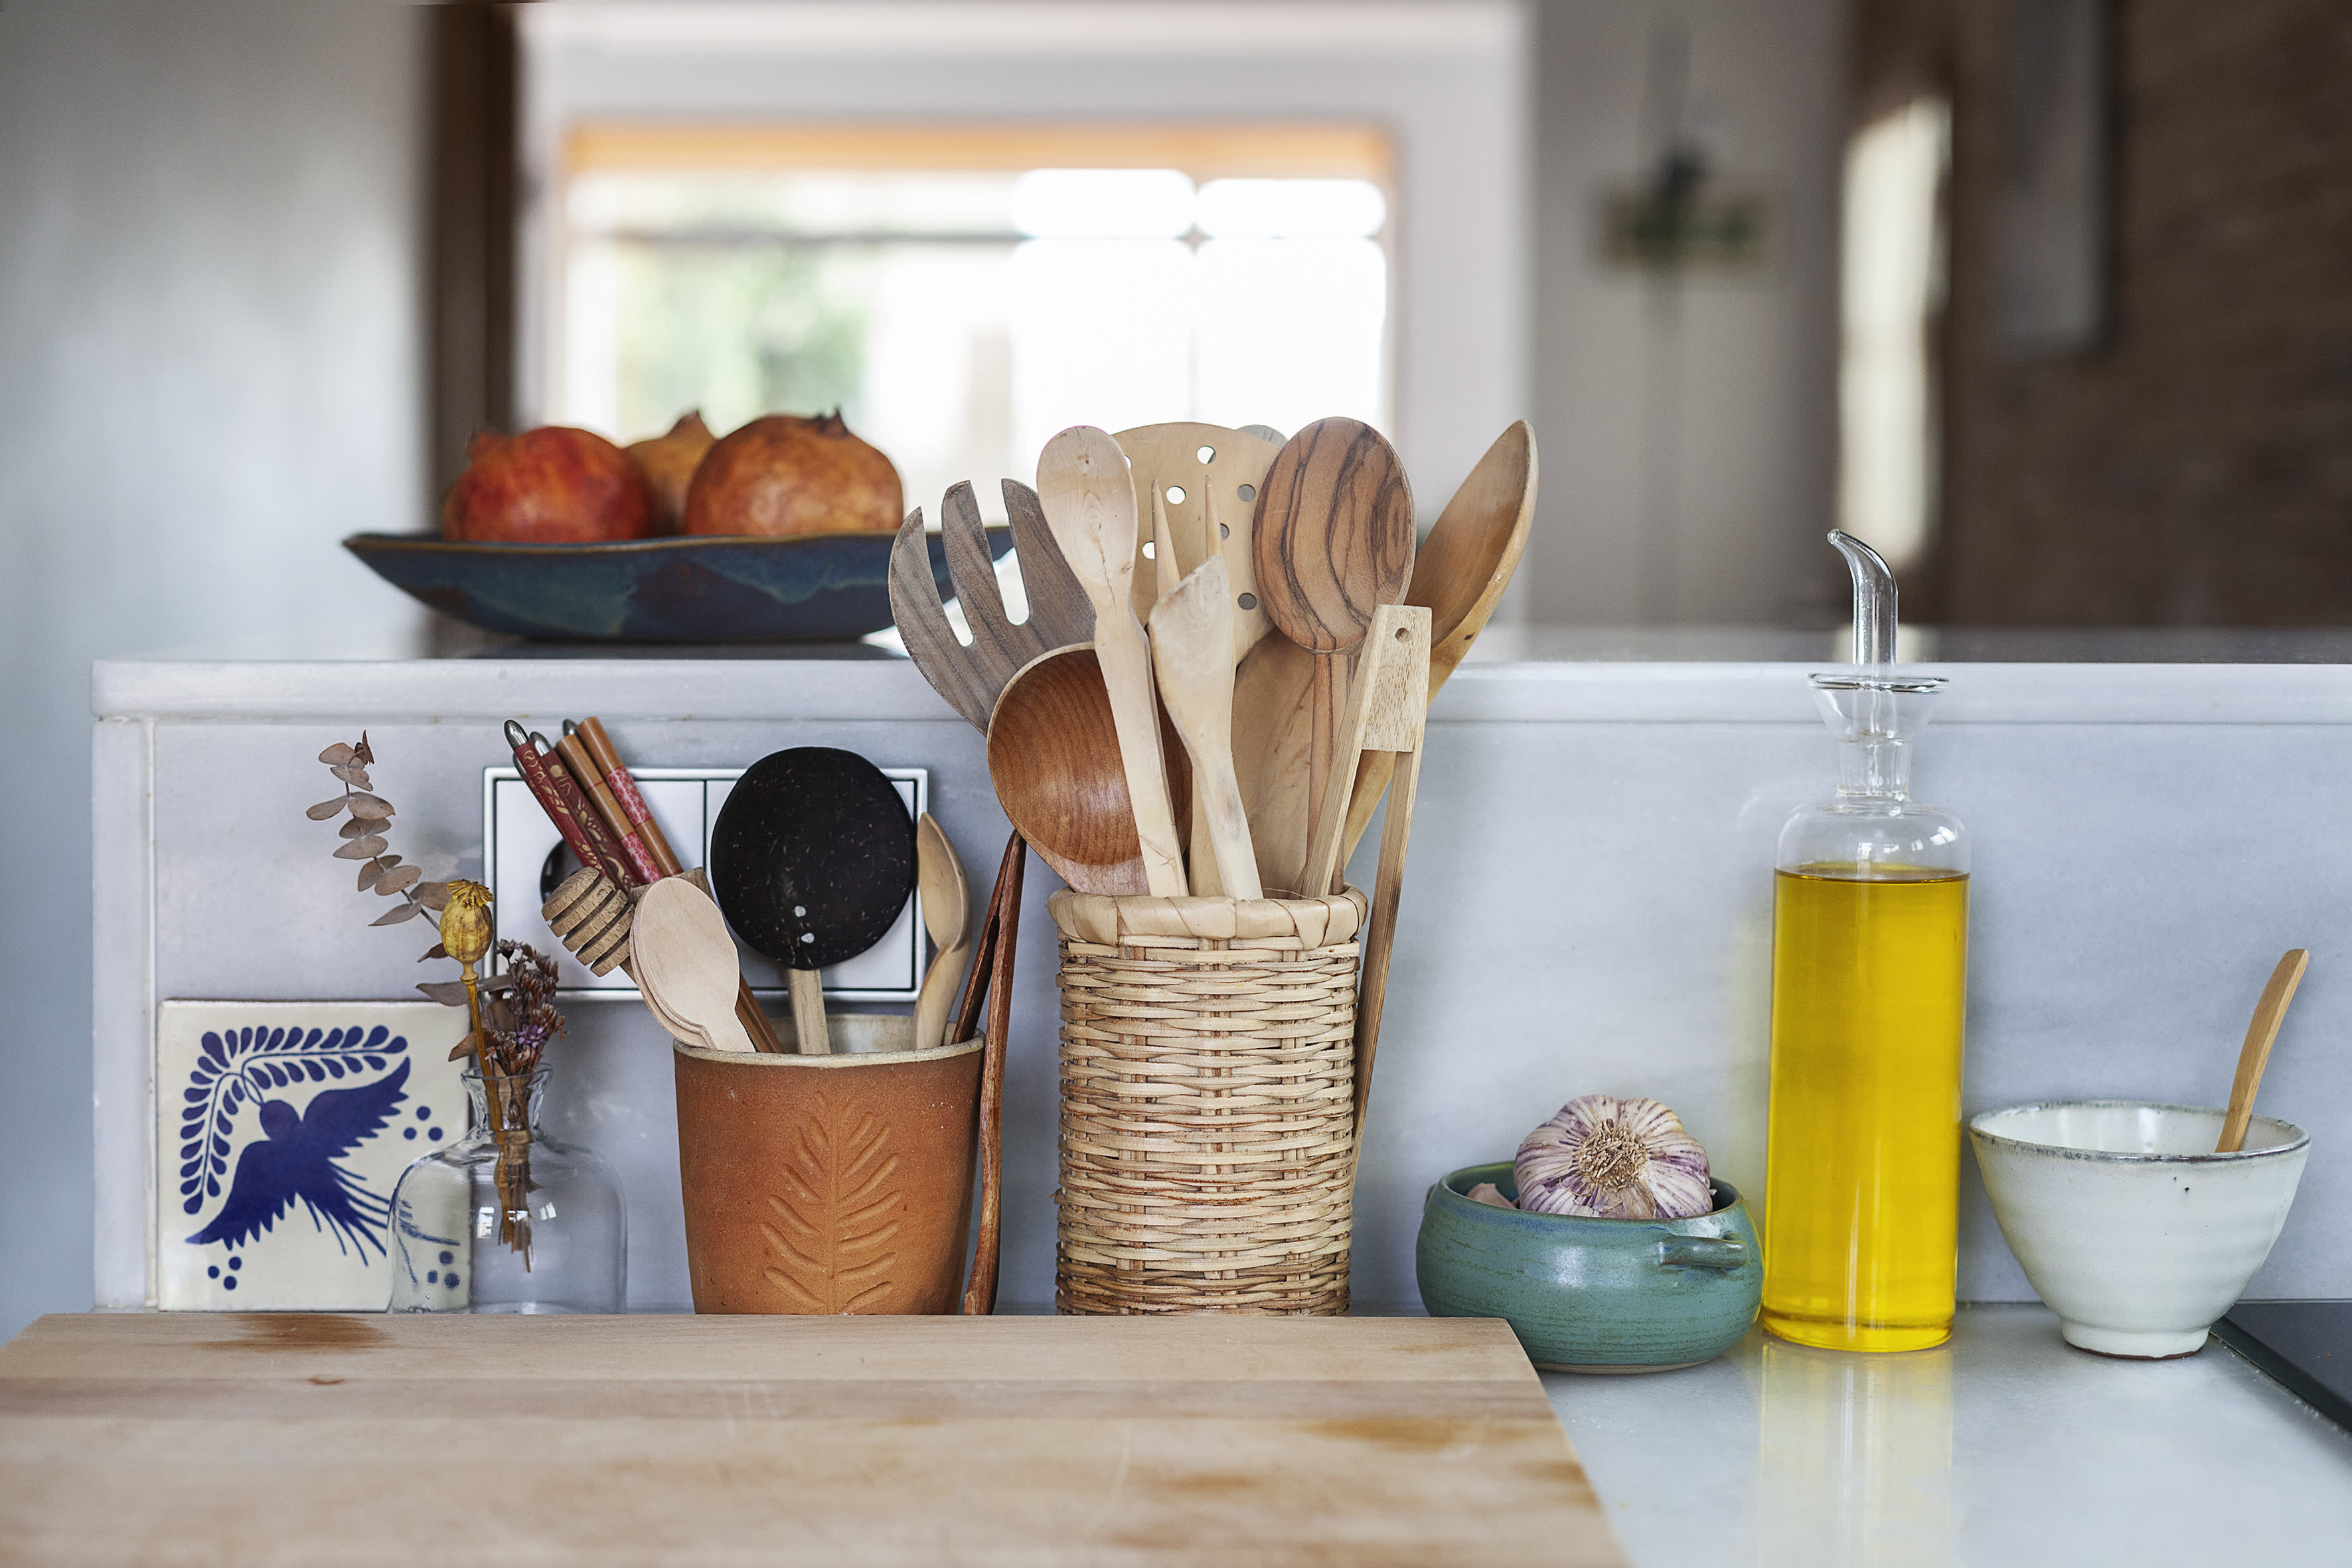 12 Common Kitchen Organizing Mistakes